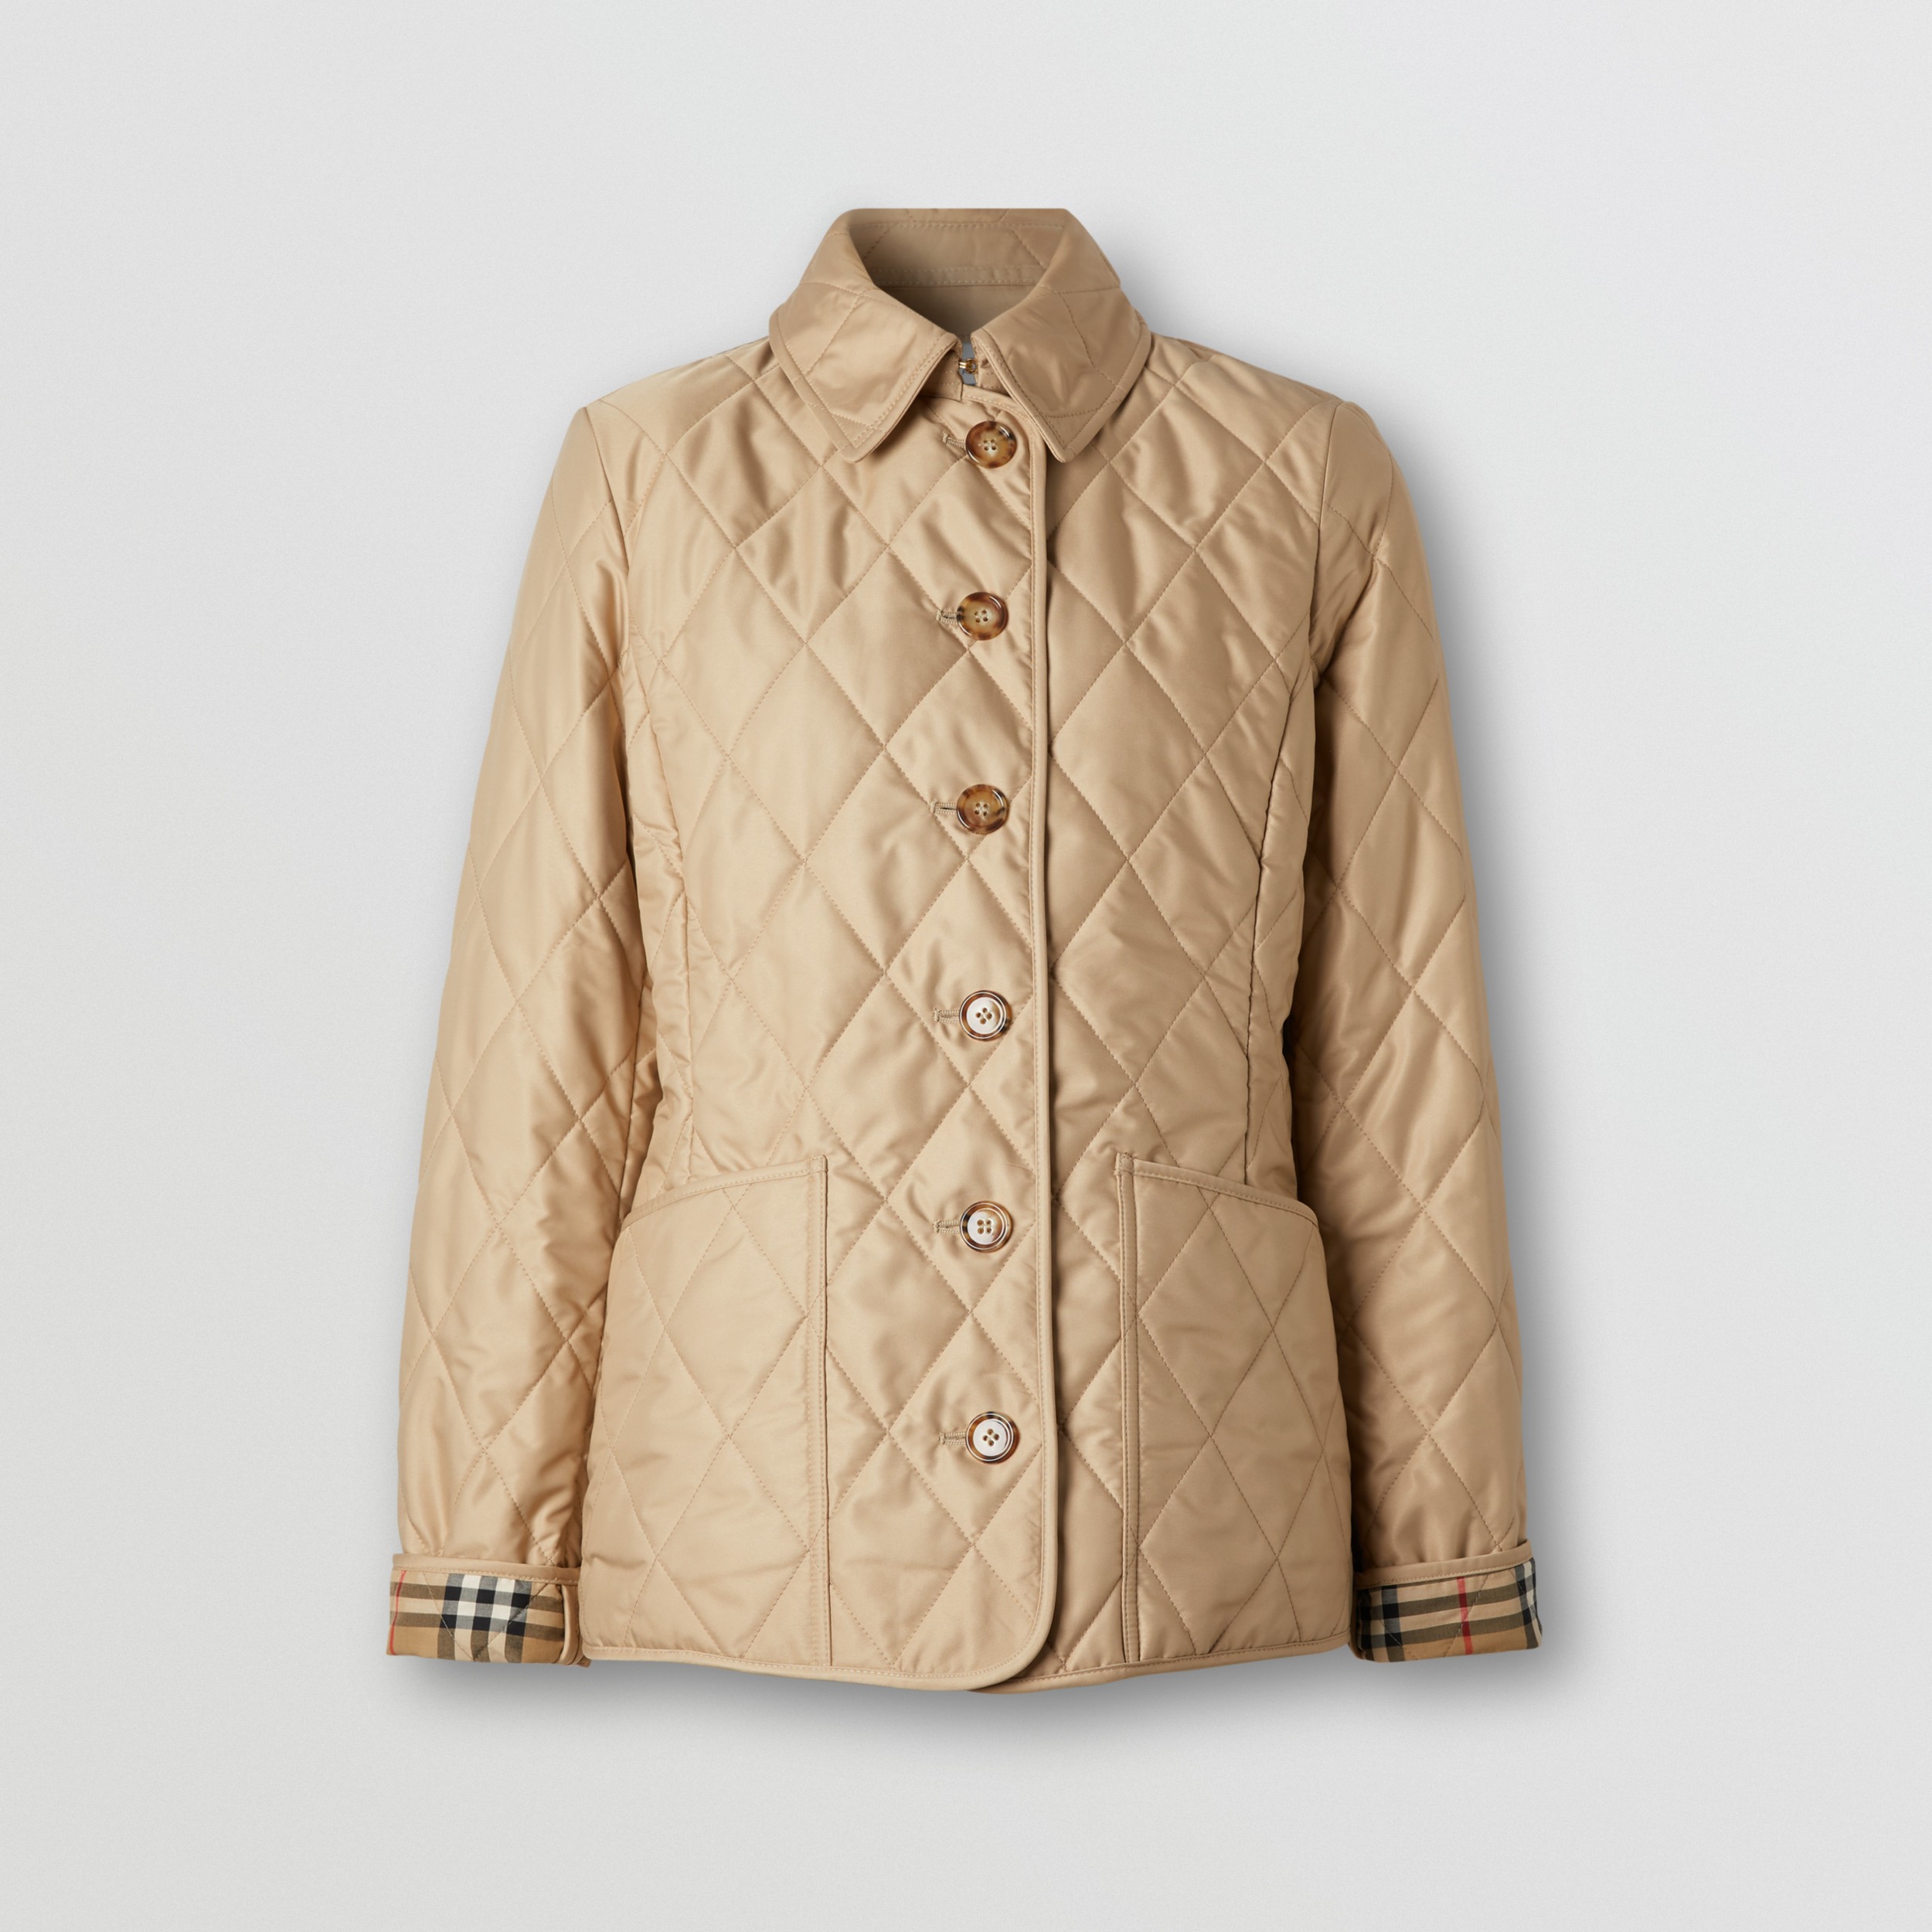 Introducir 58+ imagen burberry new jacket